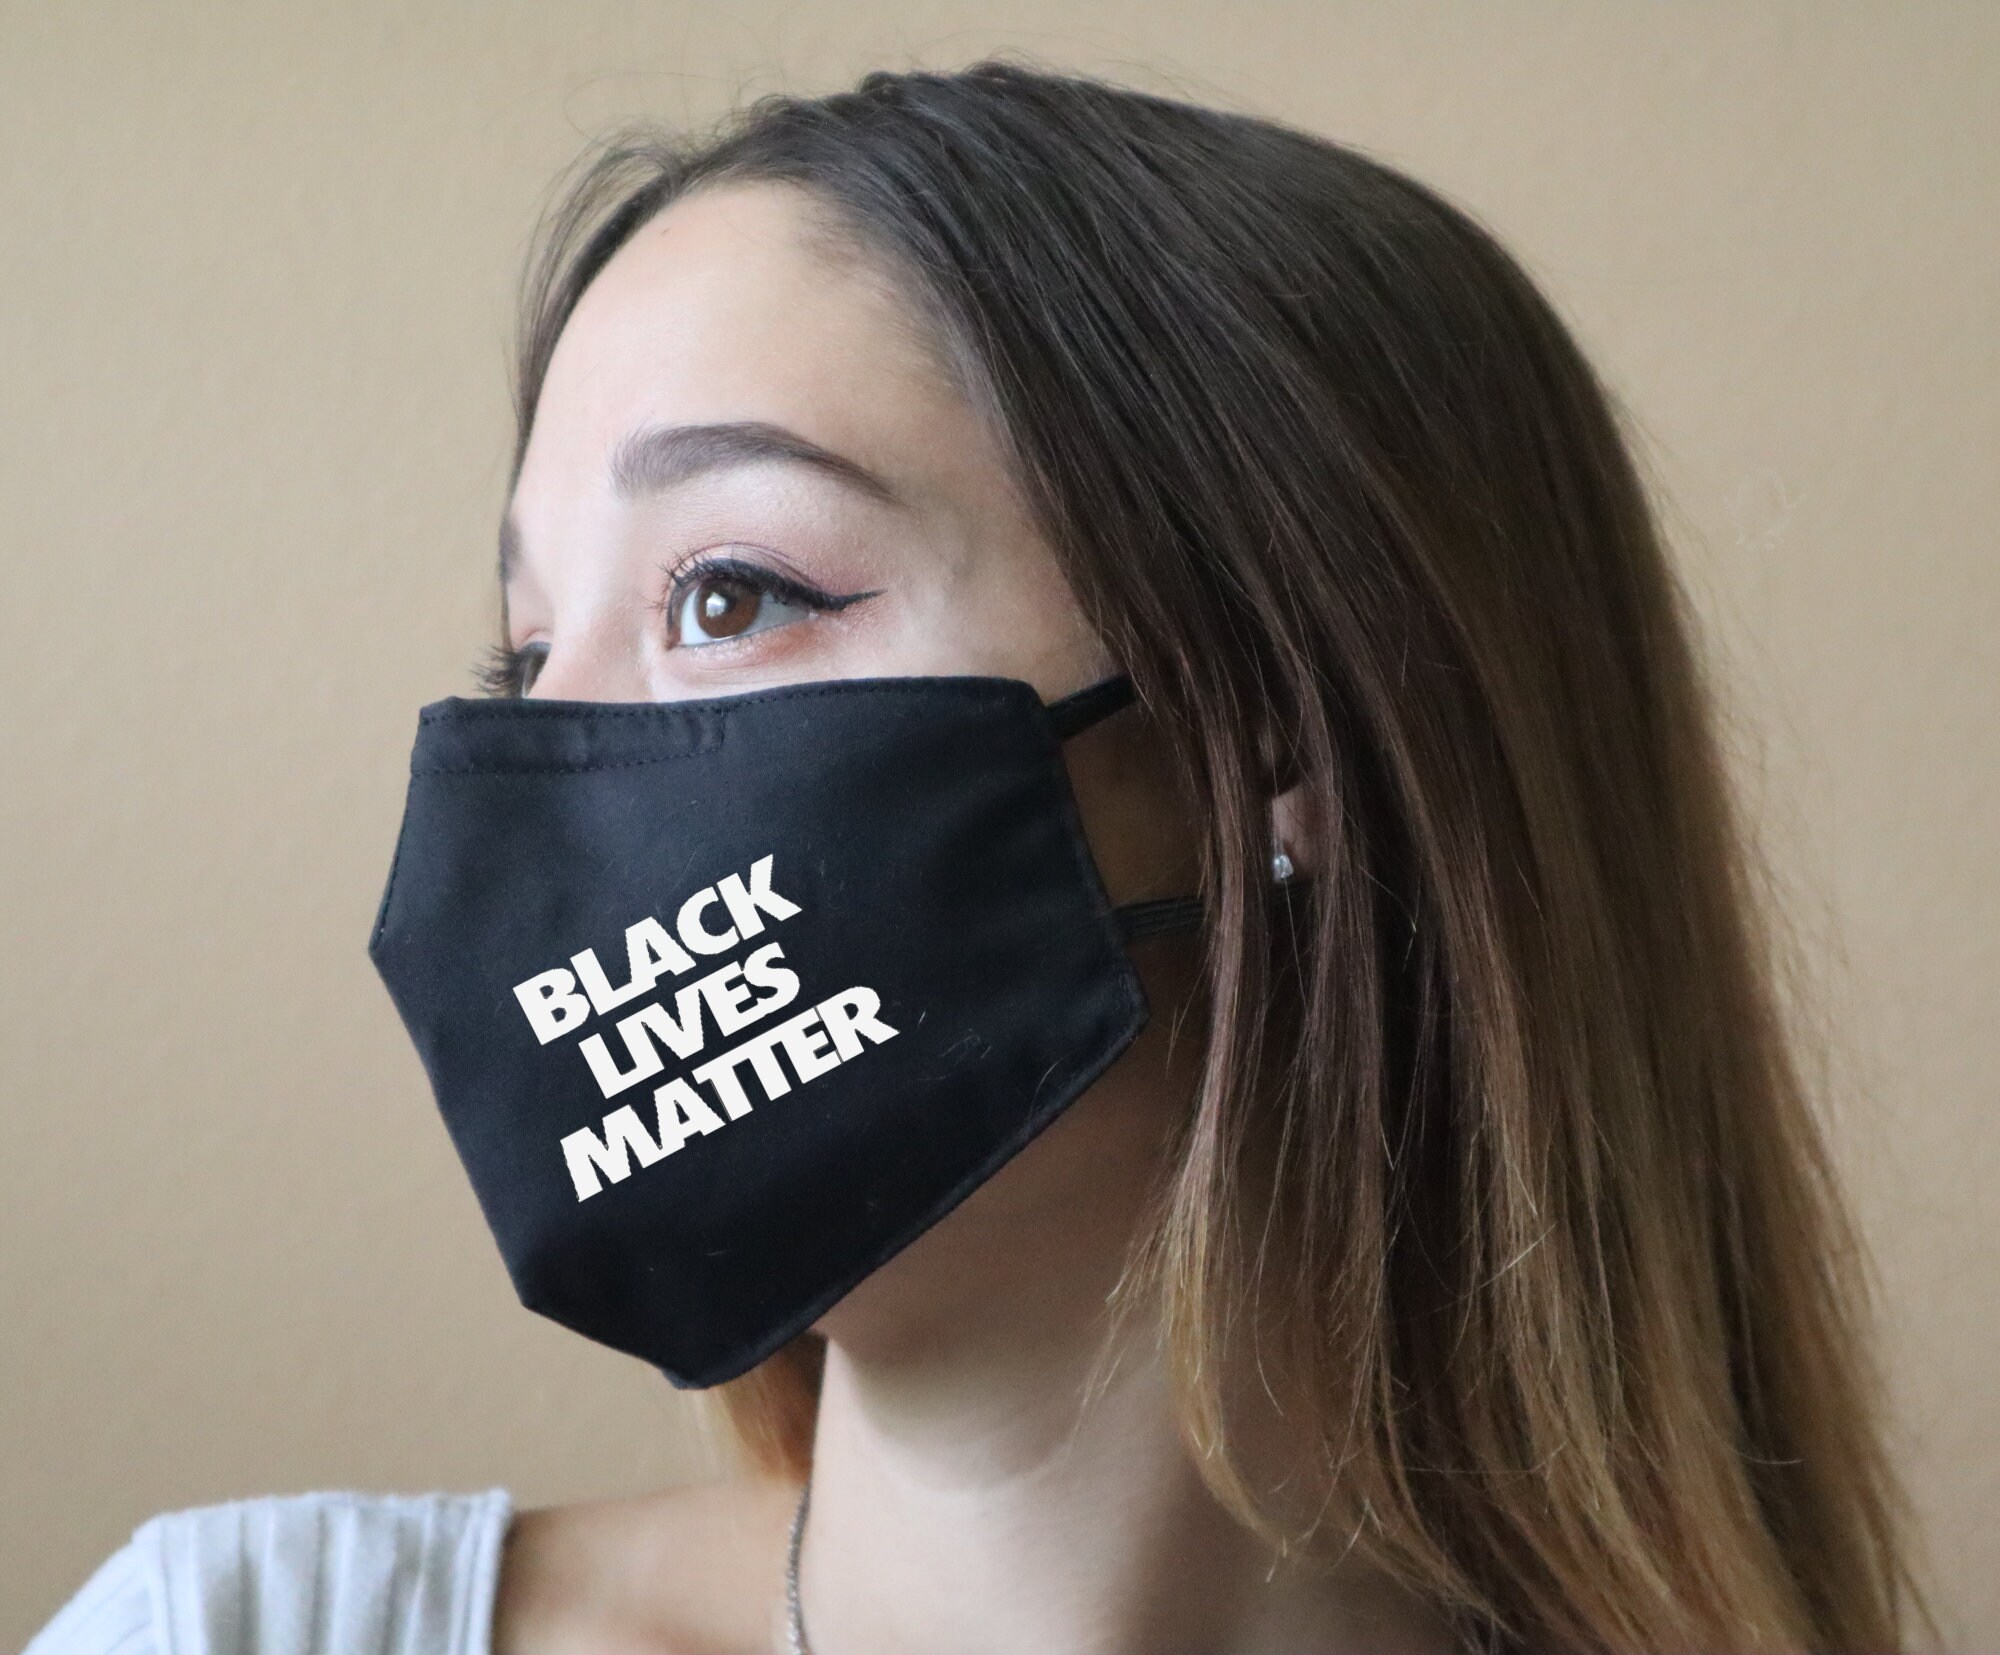 Handmade Cotton Blend Customizable Face Masks With Adjustable Ear-Loops - Black Lives Matter Adult Medium 9 X 5.5"